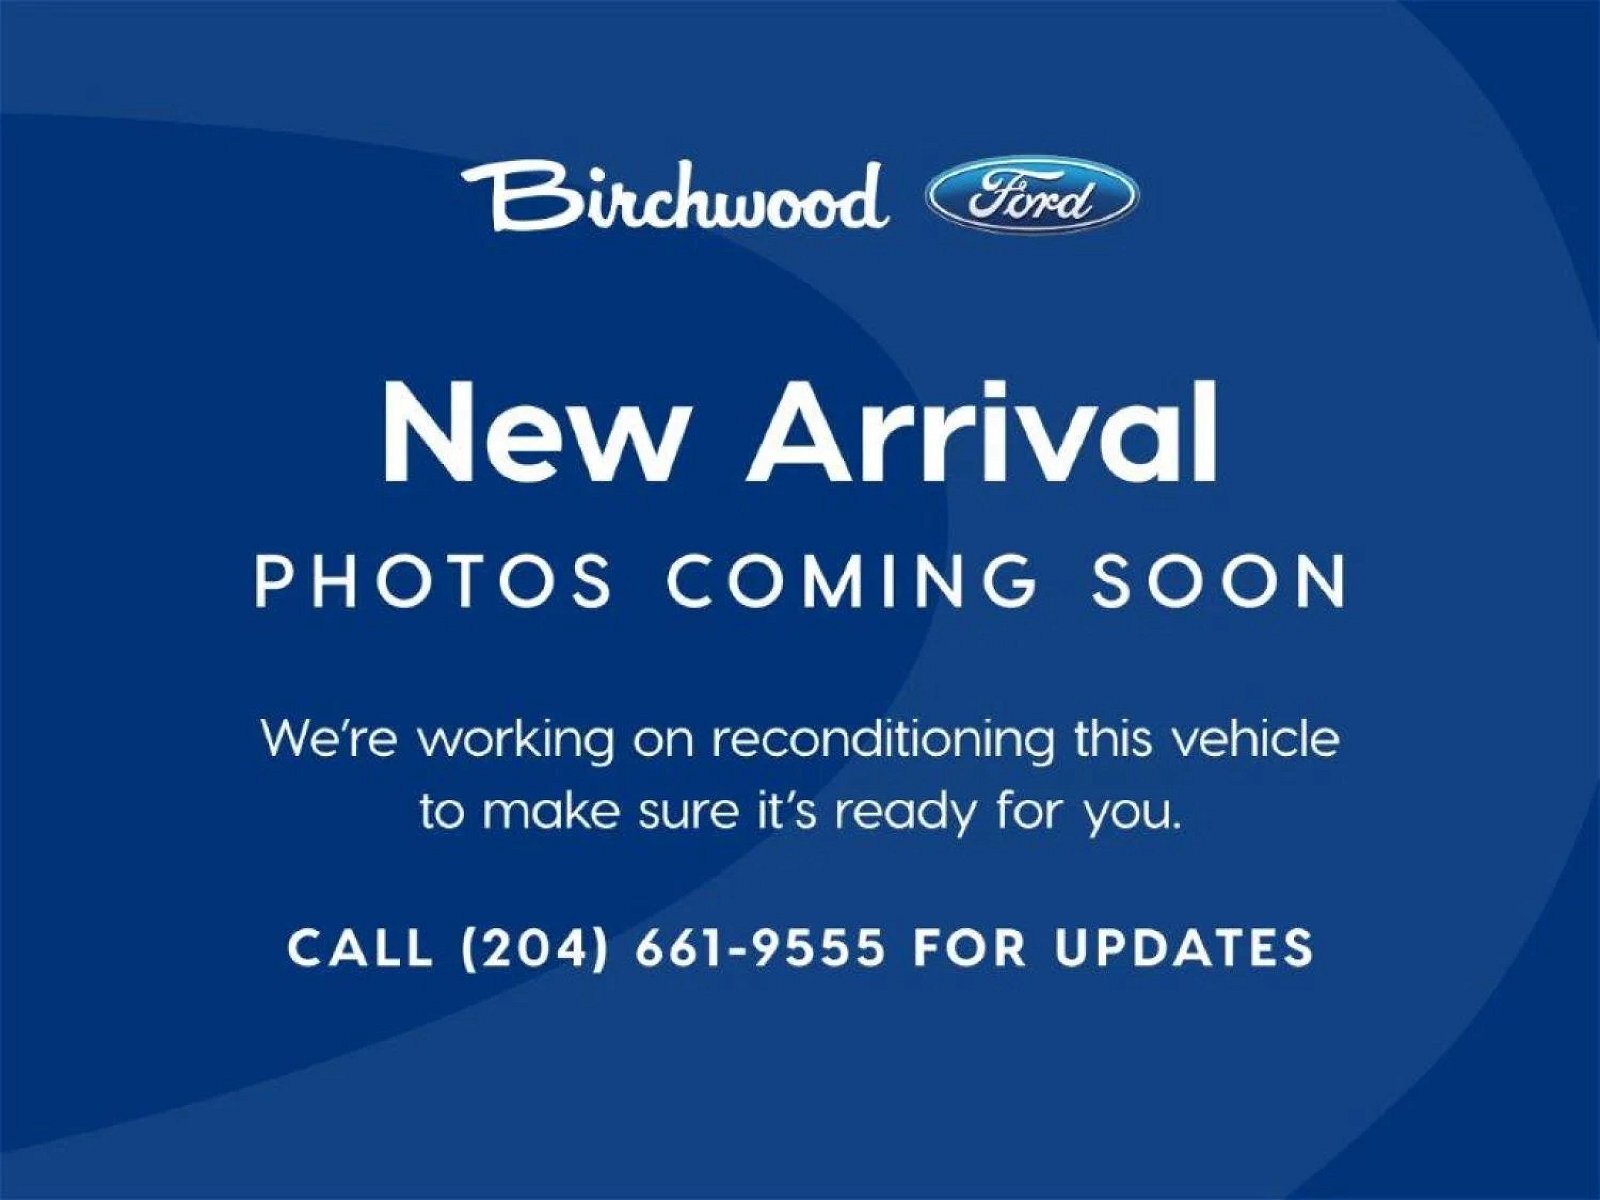 2017 Chevrolet Malibu LT Touch Screen | Back Up Camera | Proximity Entry